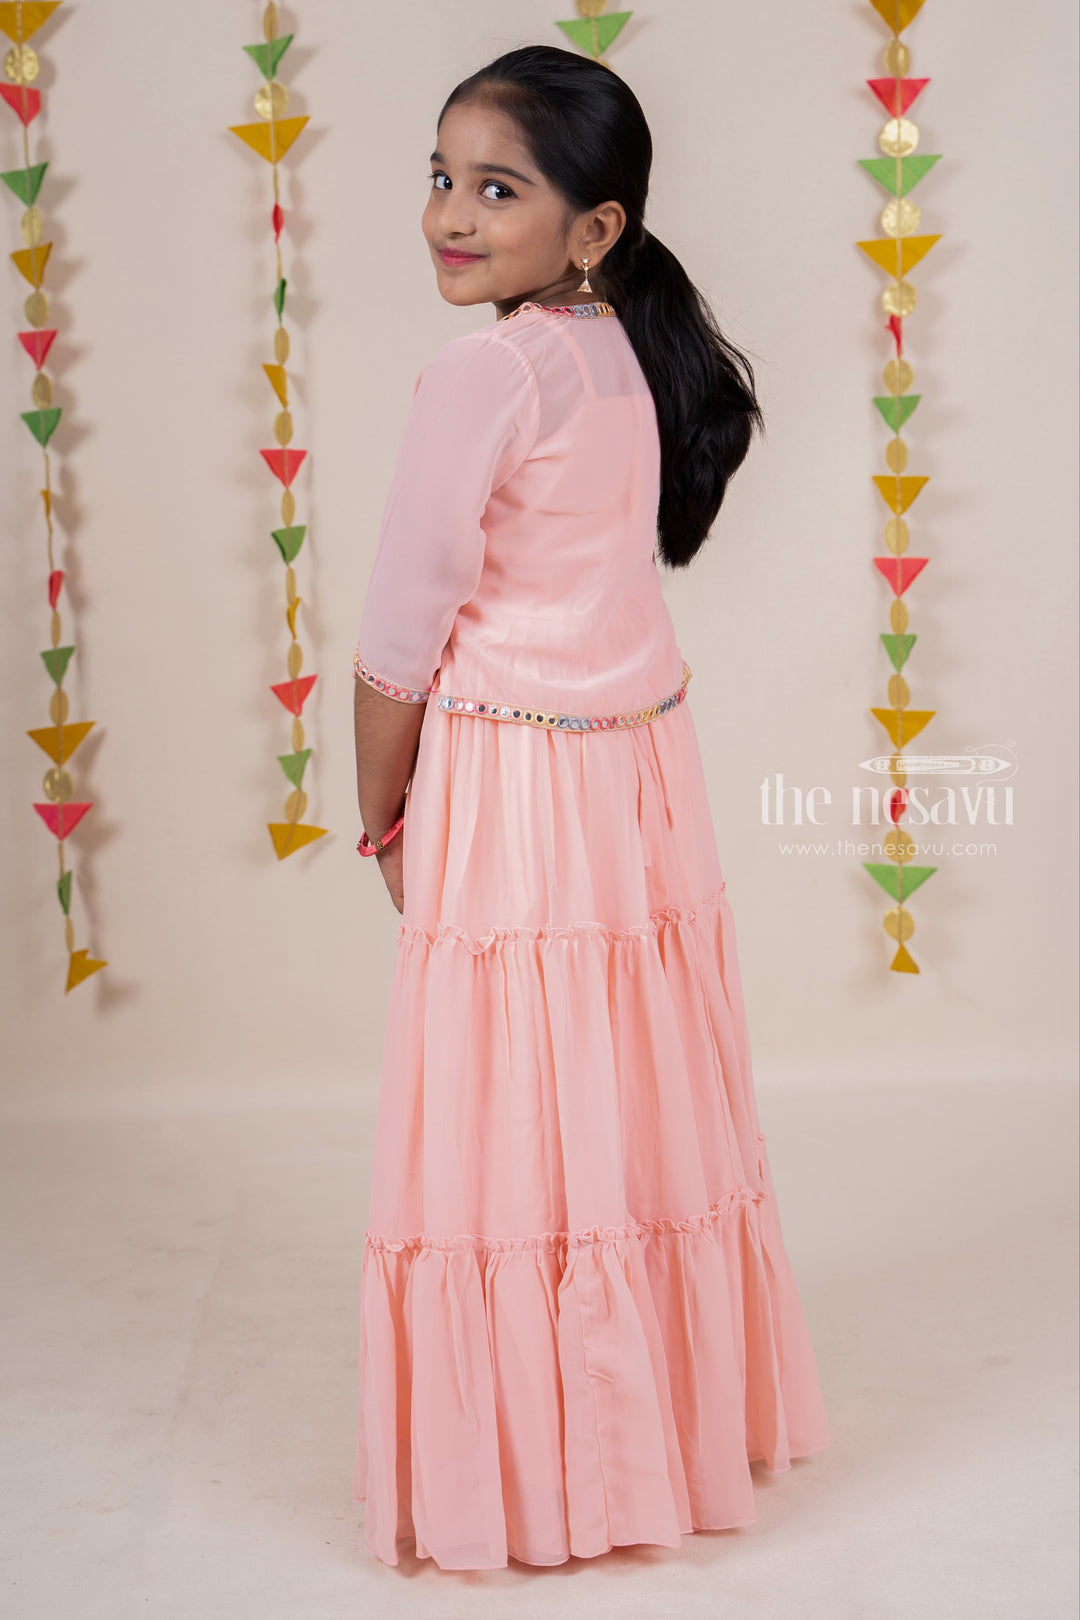 The Nesavu Lehenga & Ghagra Gorgeous Salmon Pink Floral Embroidered Top With Overcoat Anarkali Dress For Girls Nesavu